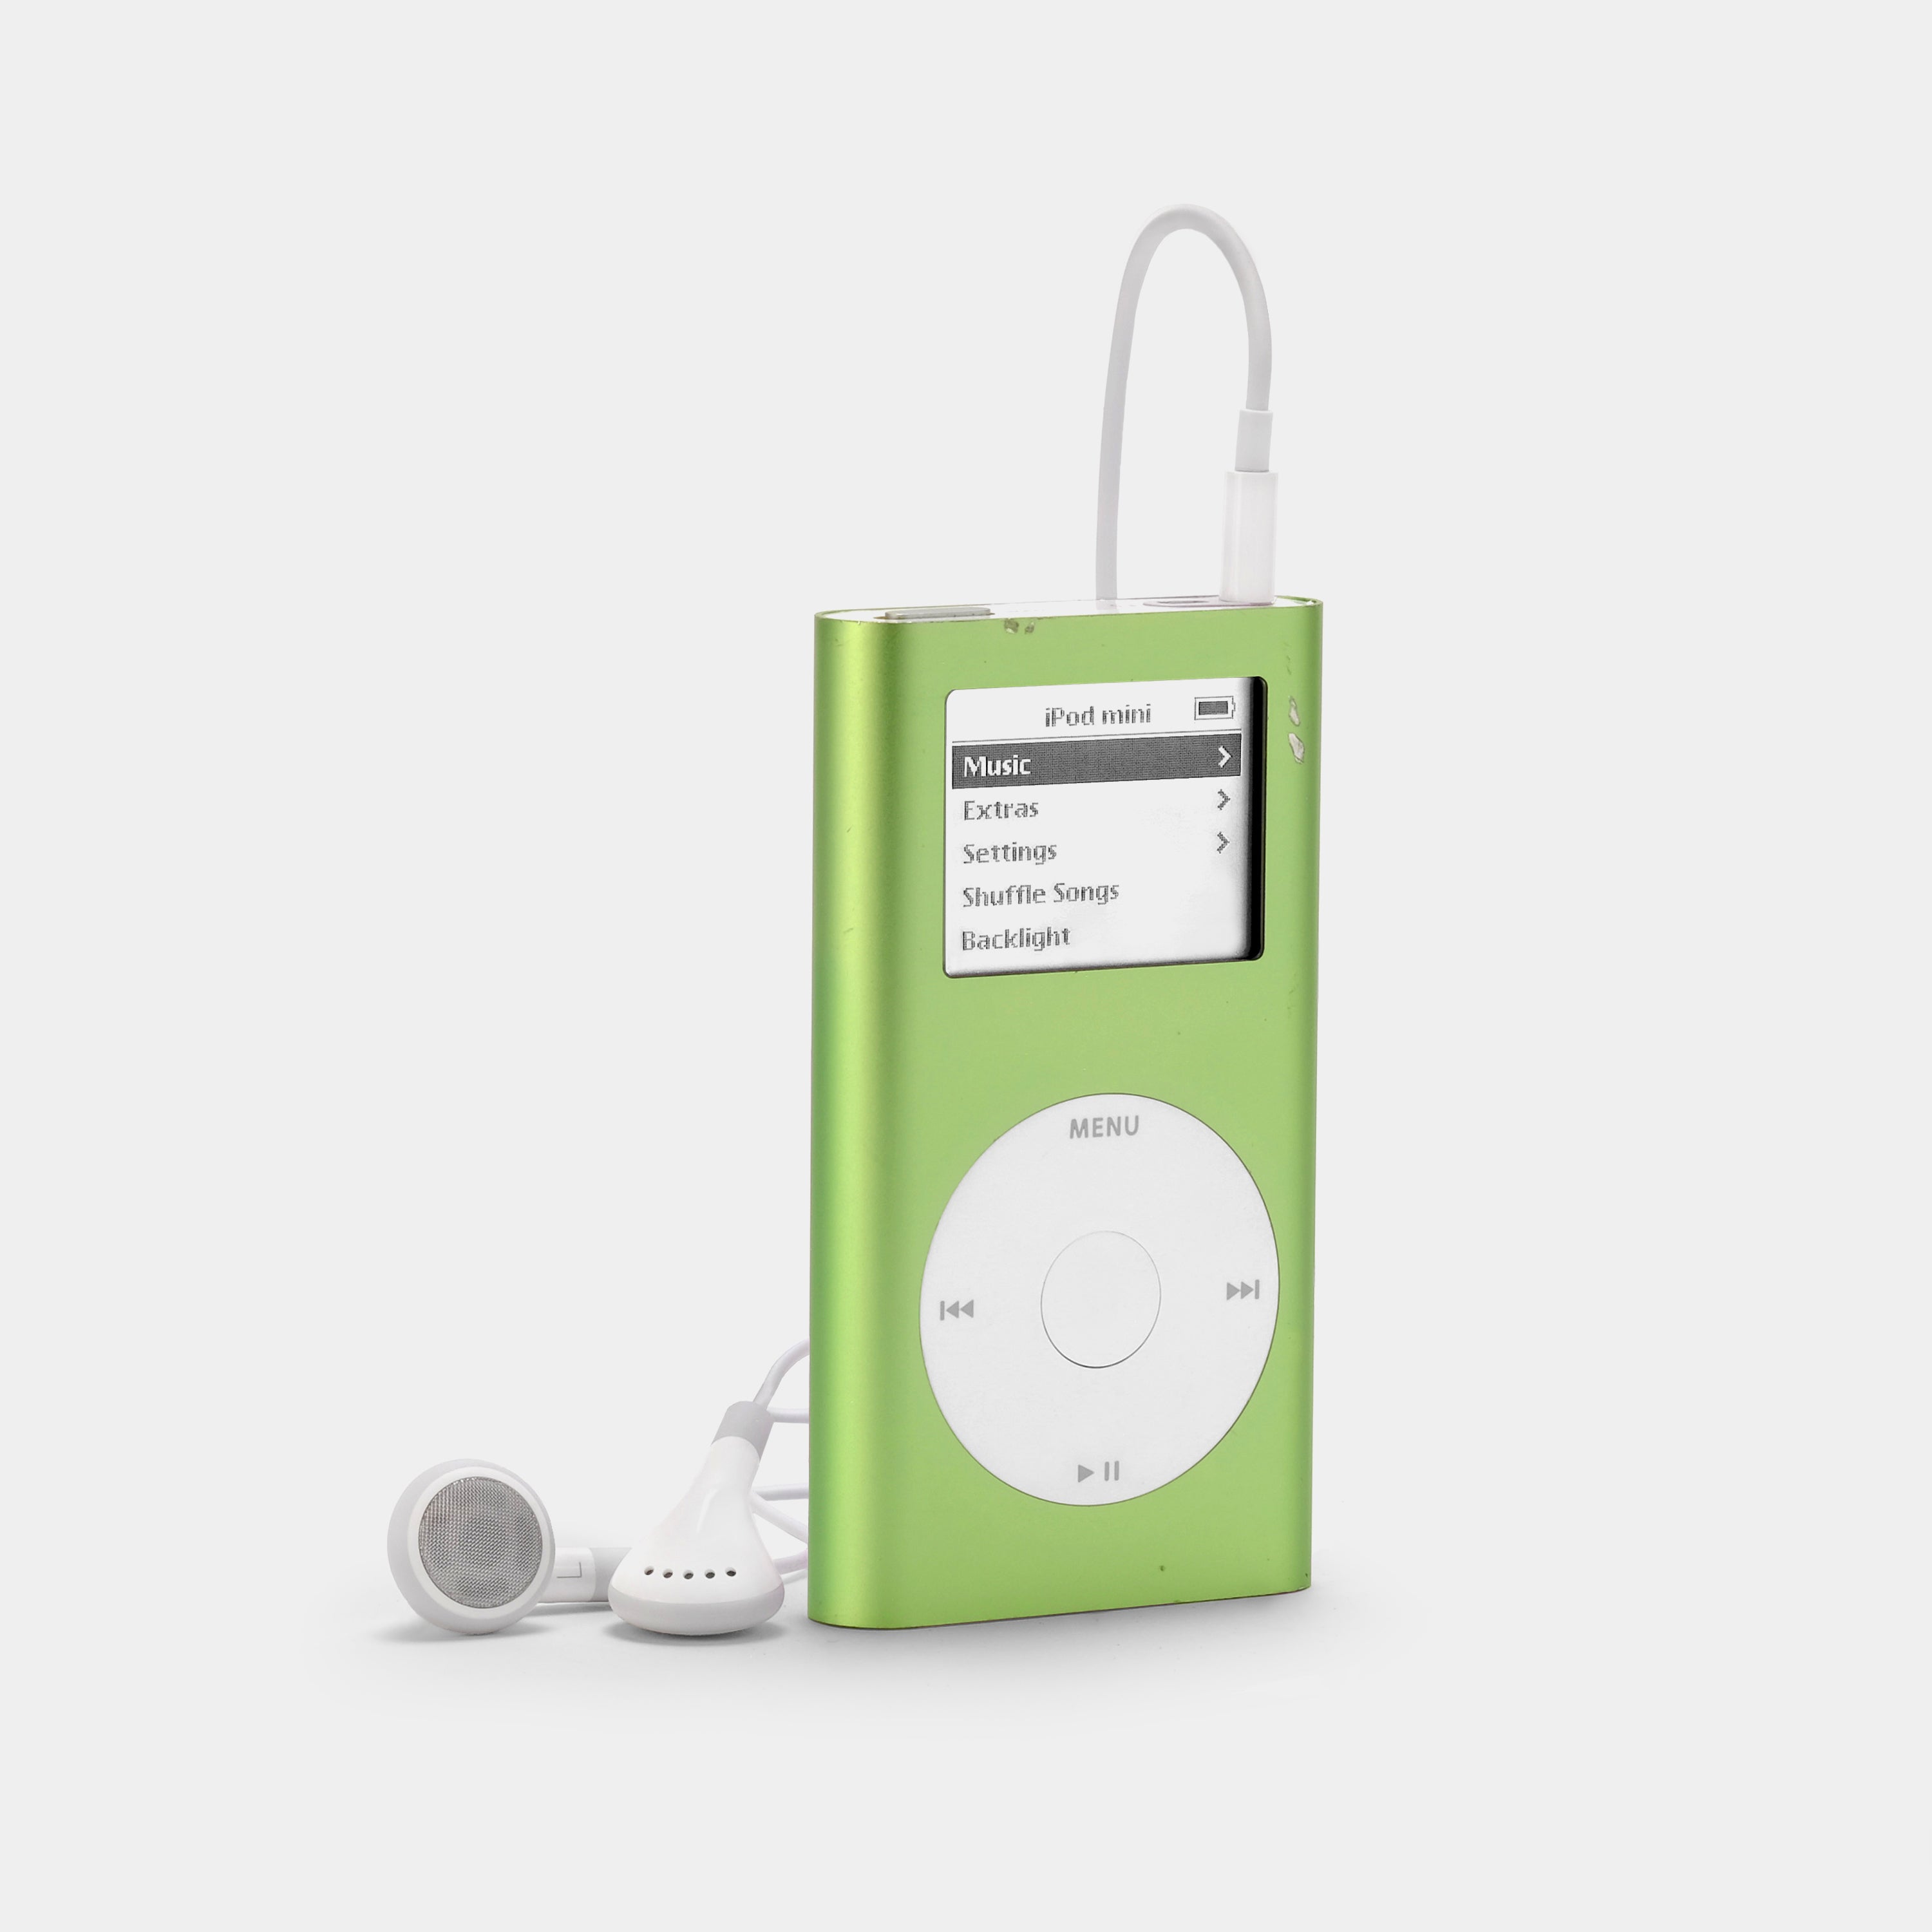 Apple iPod Mini (1st Generation) MP3 Player